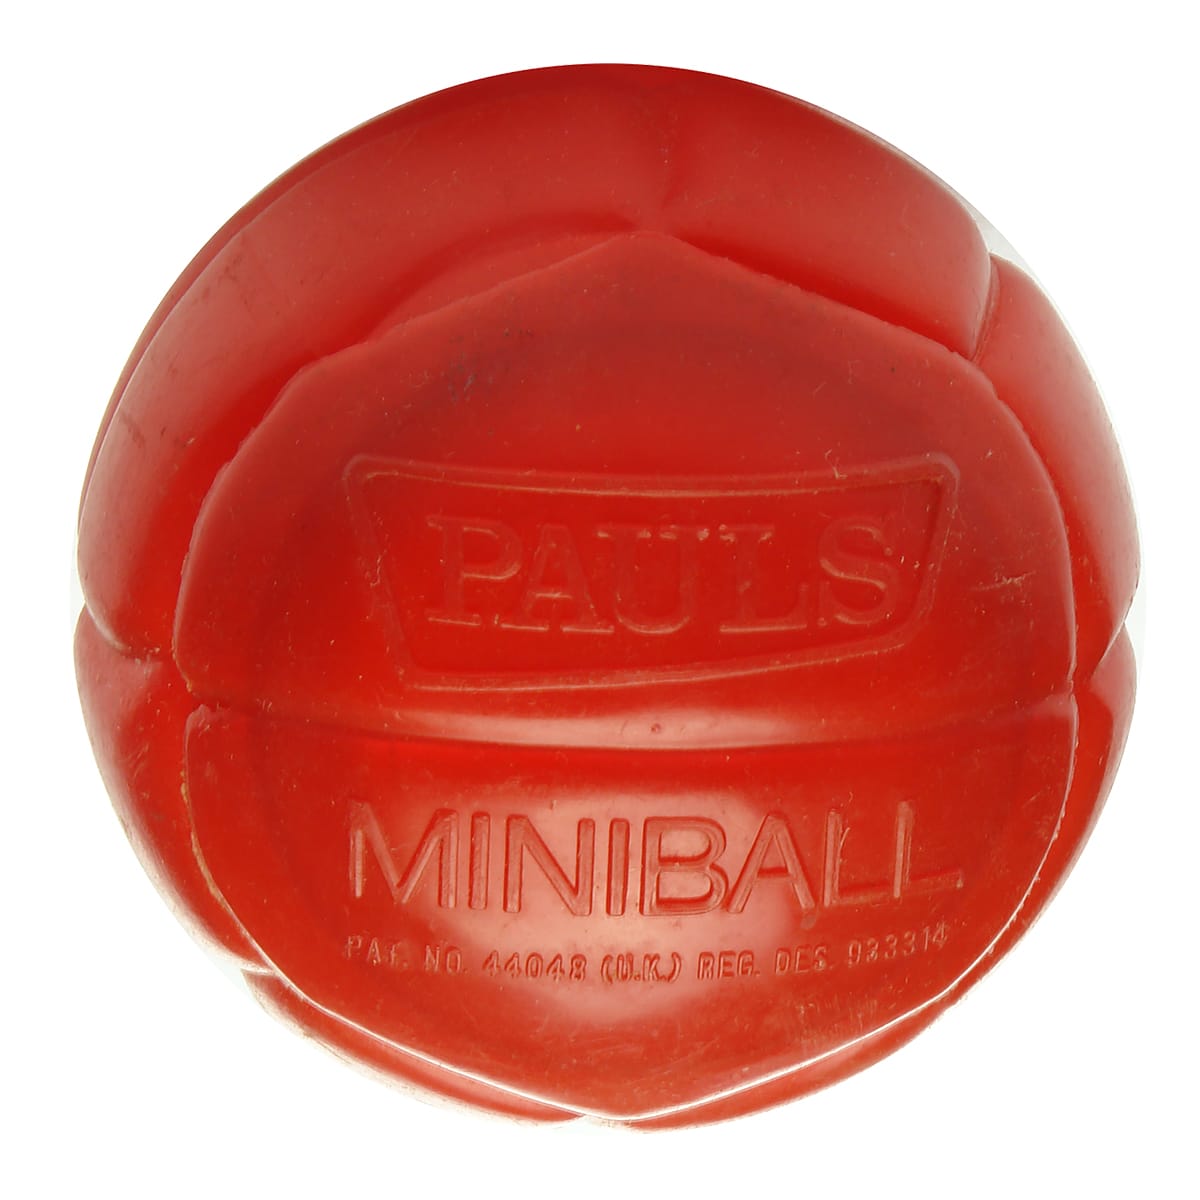 Pauls Miniball.